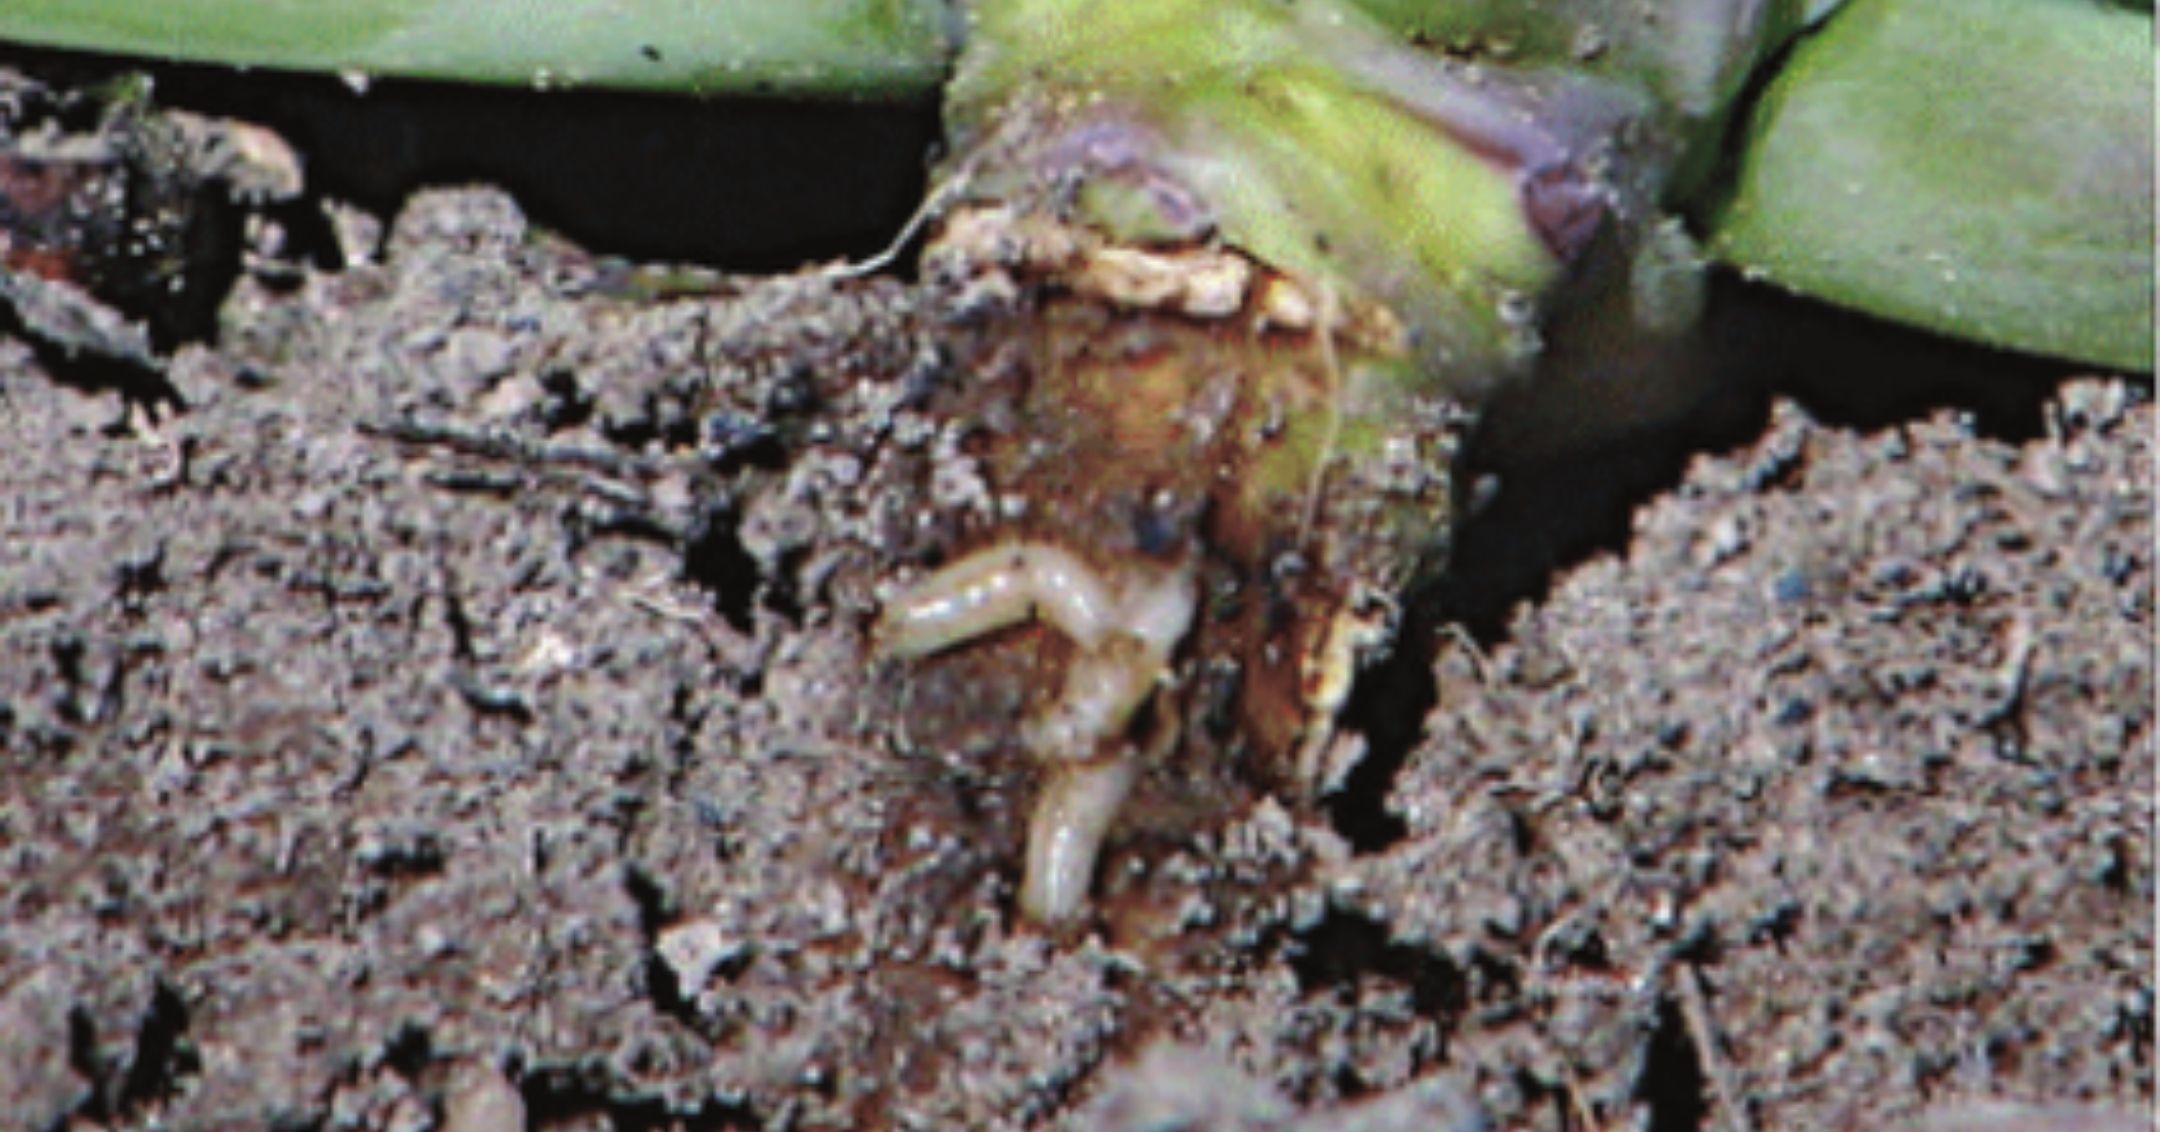 Seedcorn Maggot Damage on Cauliflower